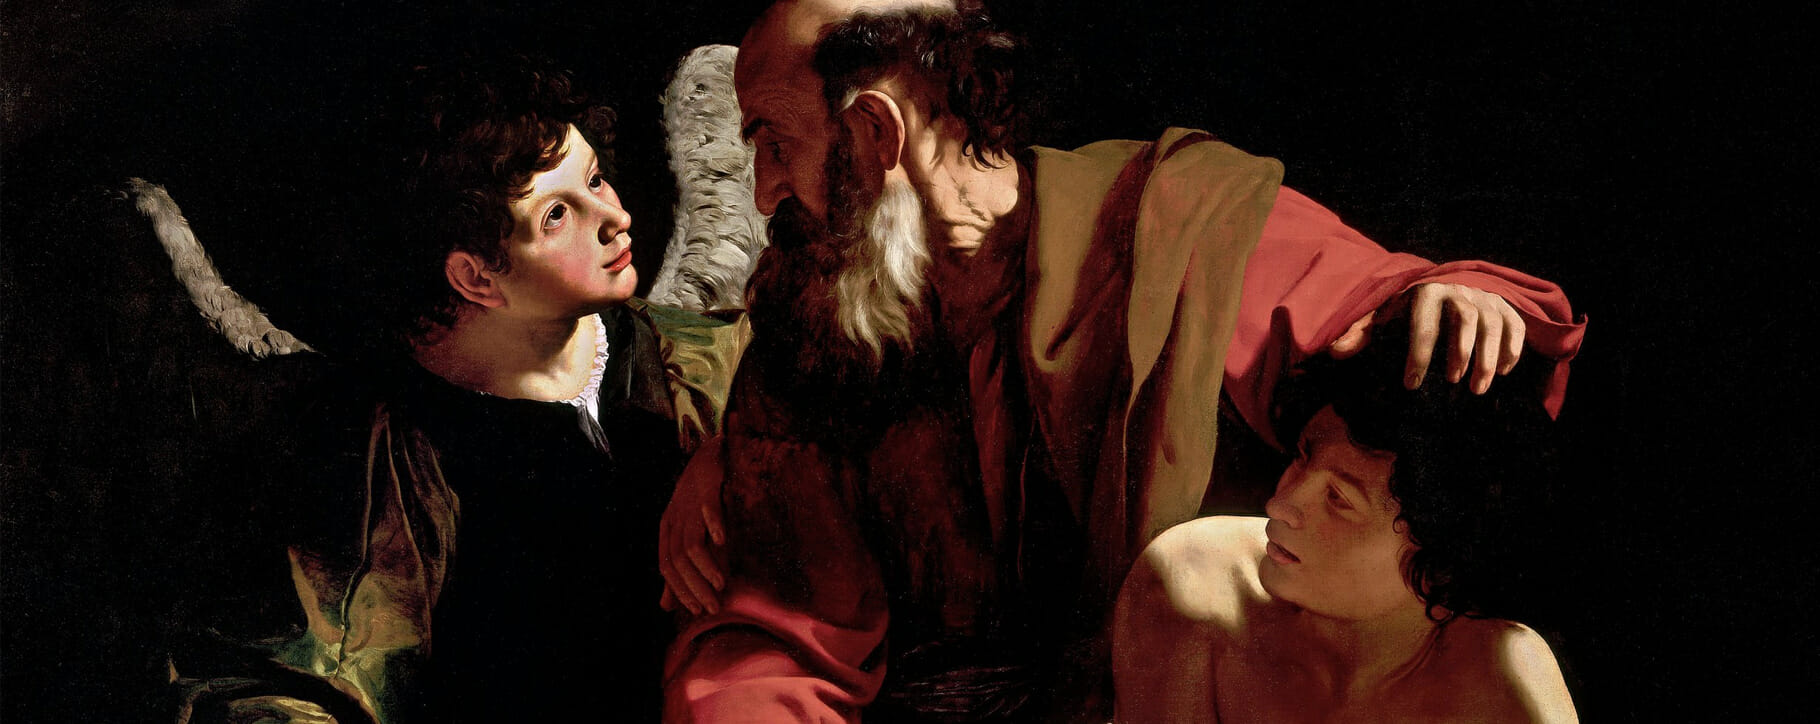 Caravaggio Sacrifice of Isaac